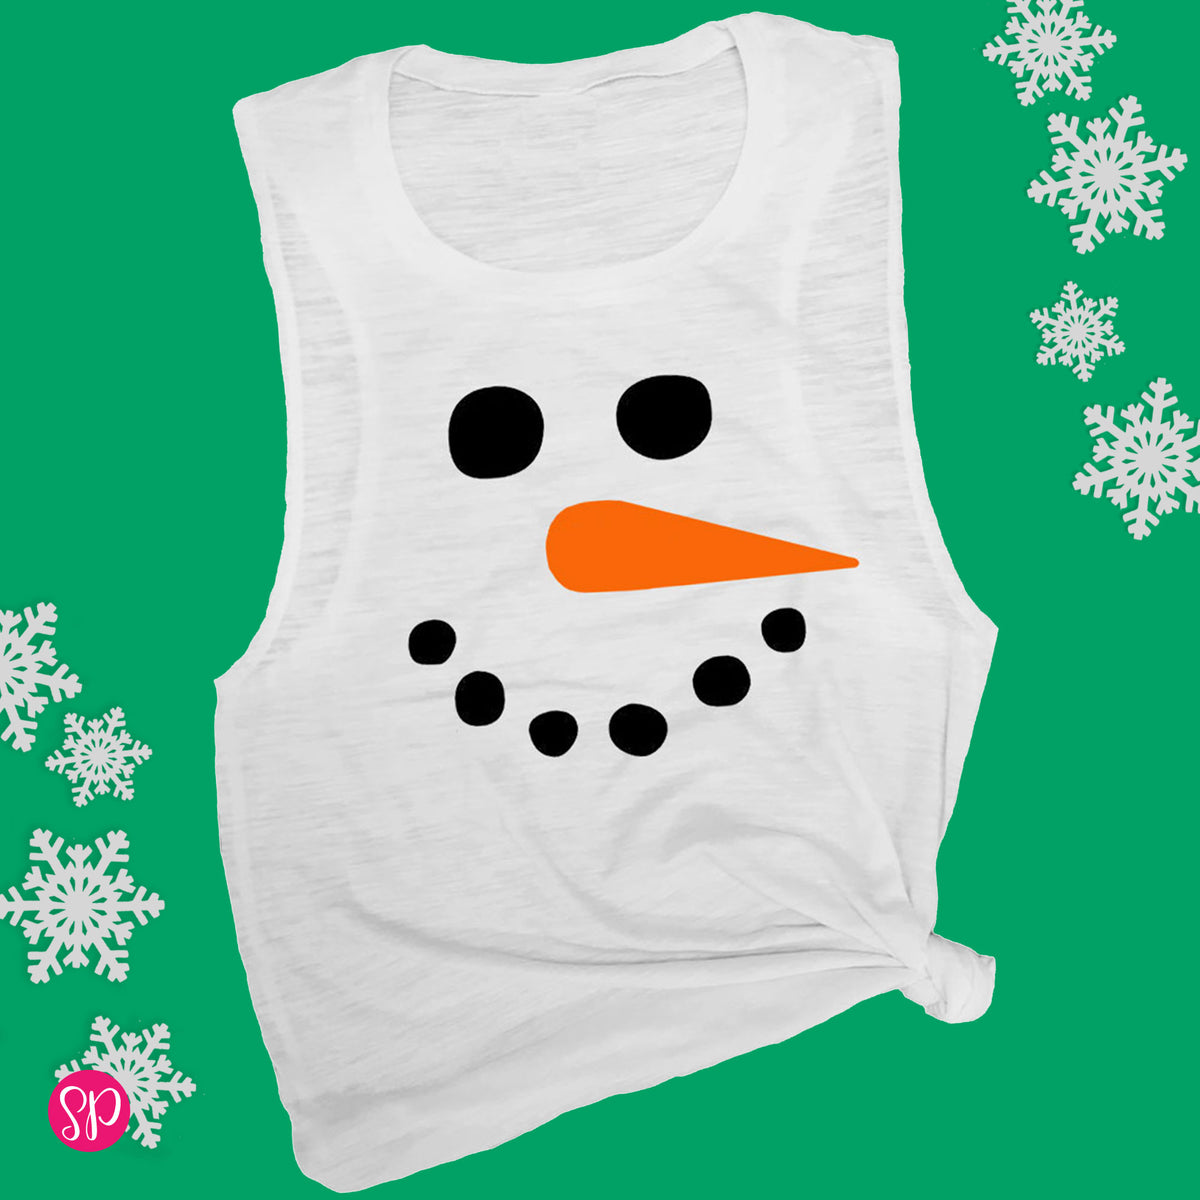 Snowman Face Holiday Christmas Winter Workout Fitness Tank Top Tee Shirt